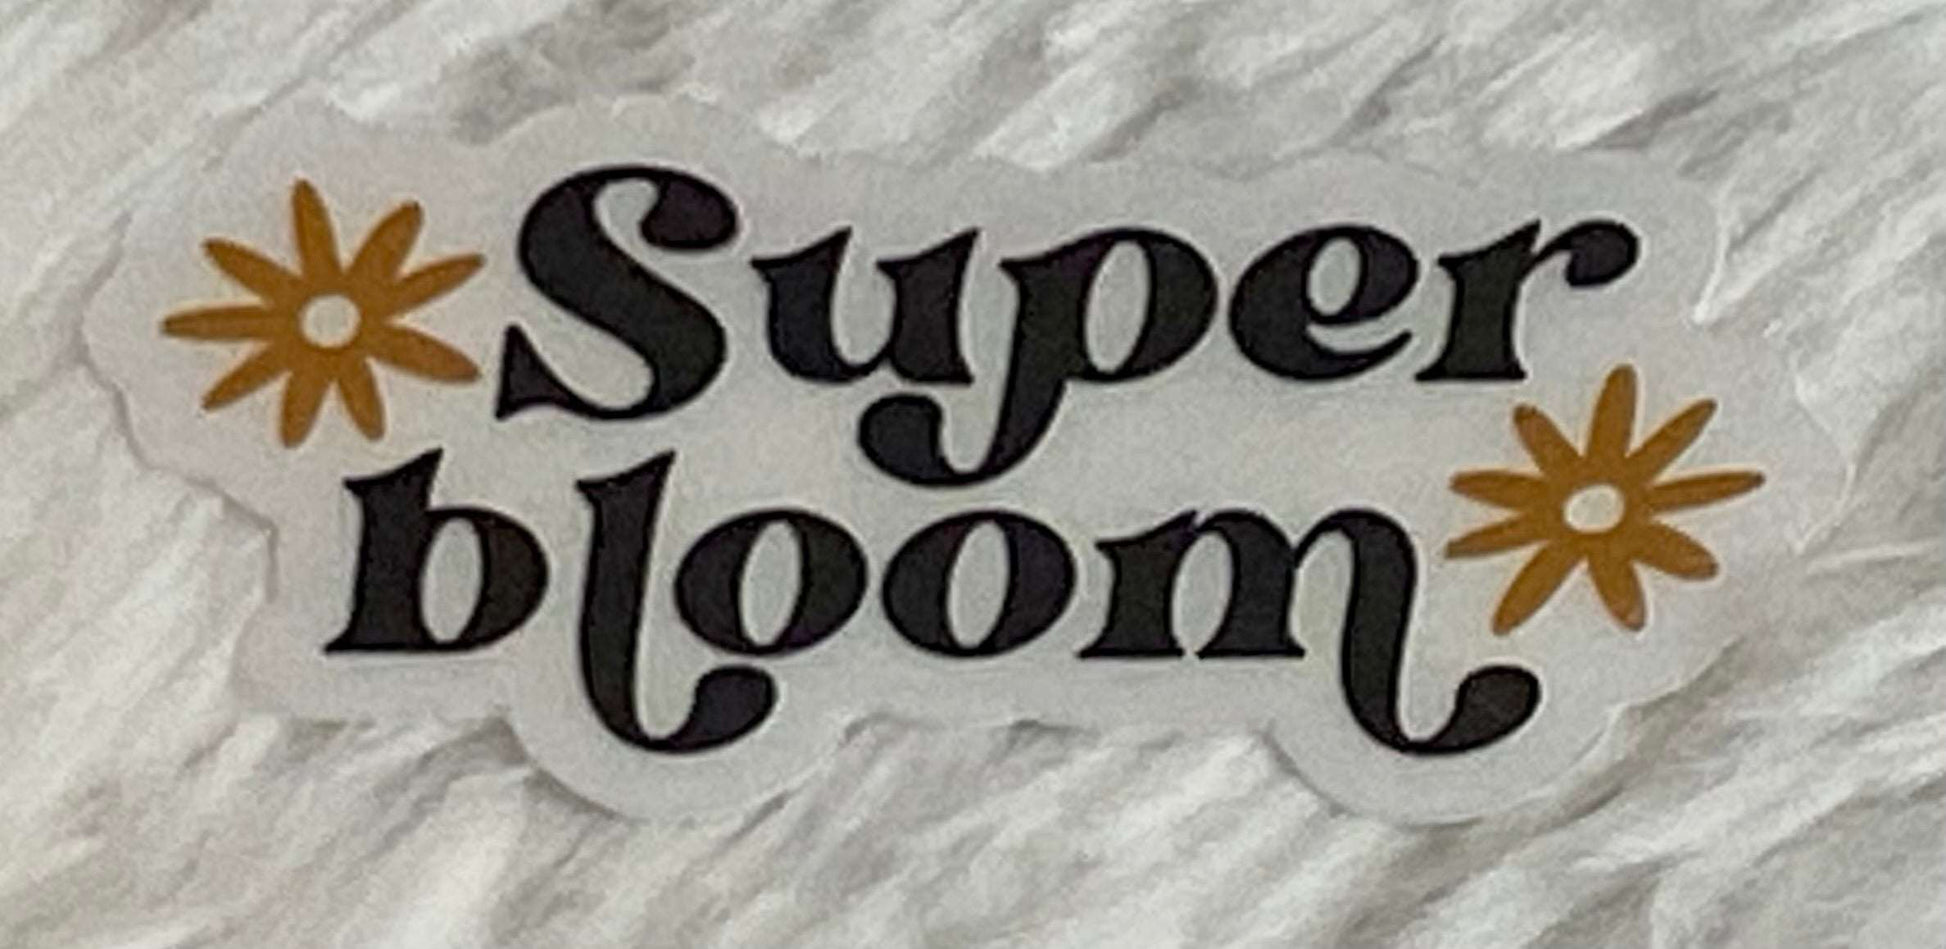 Super Bloom - Sticker - In Perfect Bloom